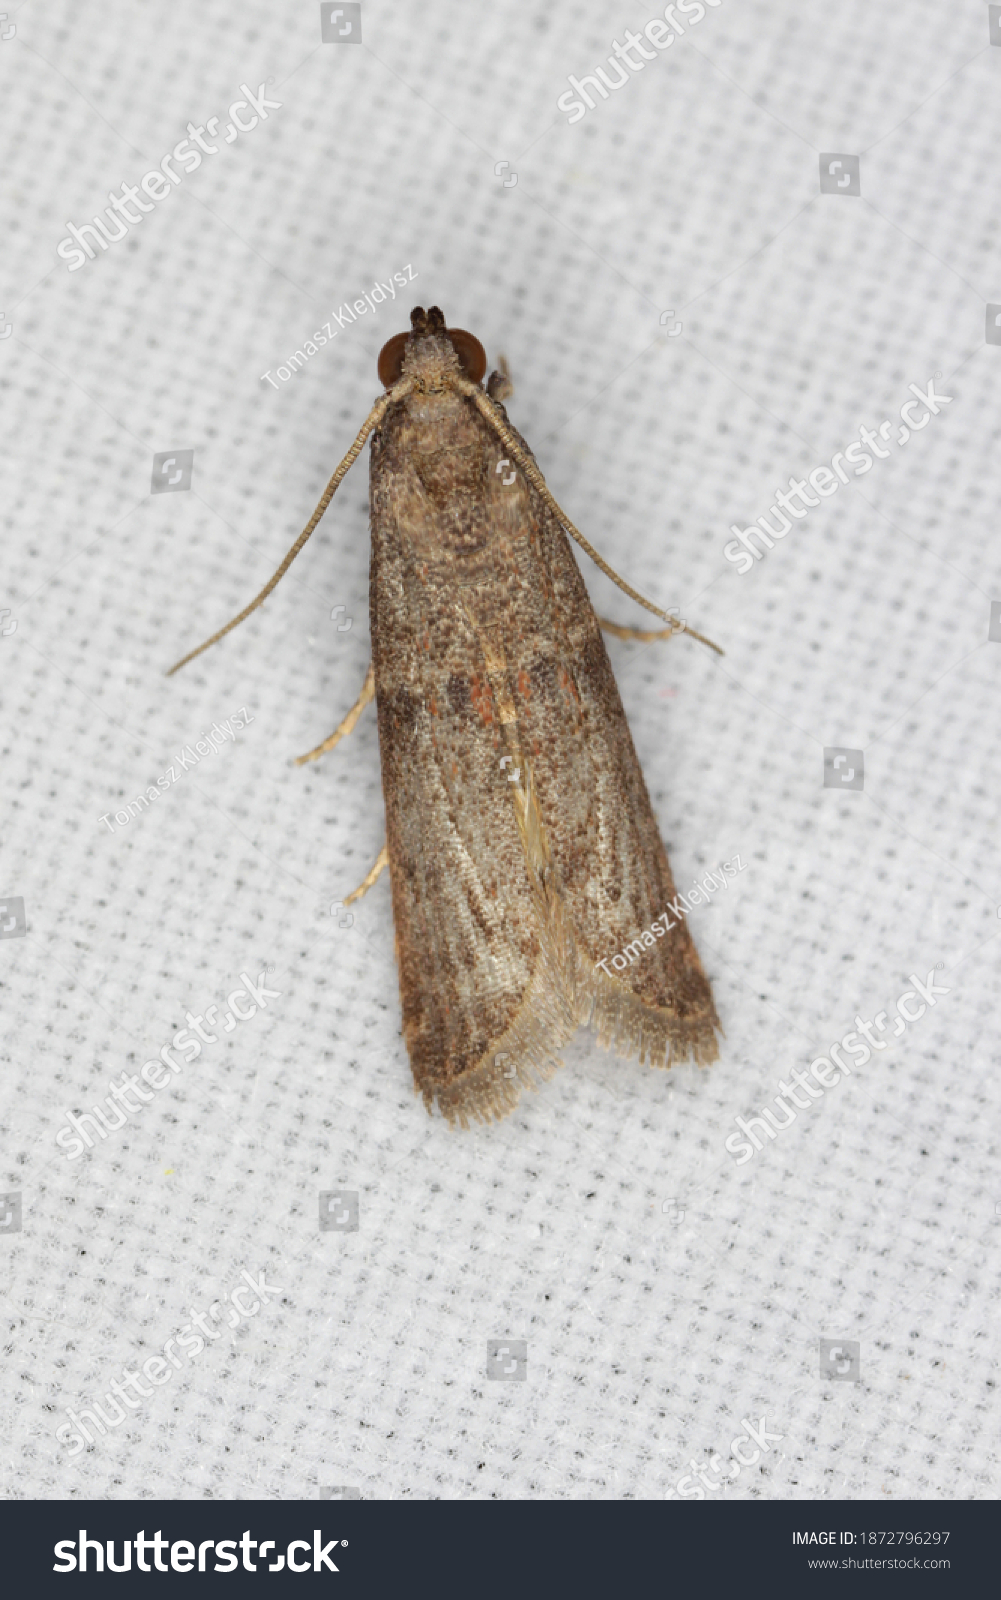 116 Almond Moth Images, Stock Photos & Vectors | Shutterstock